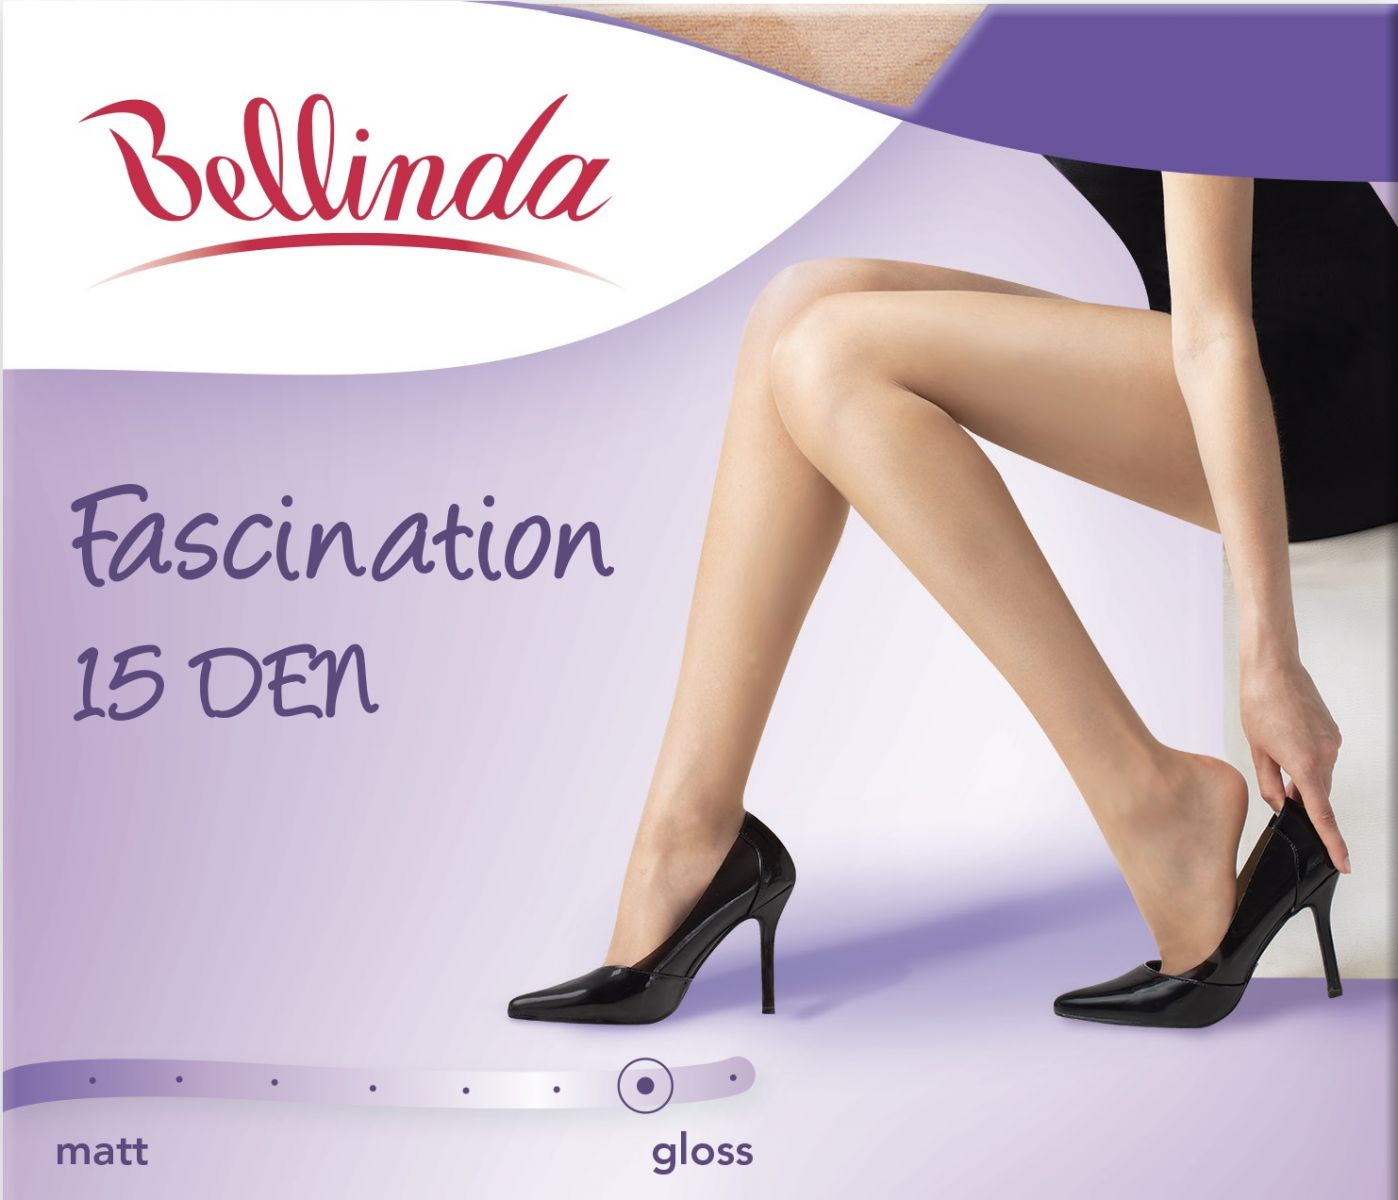 Bellinda Fascination 15 BE225001